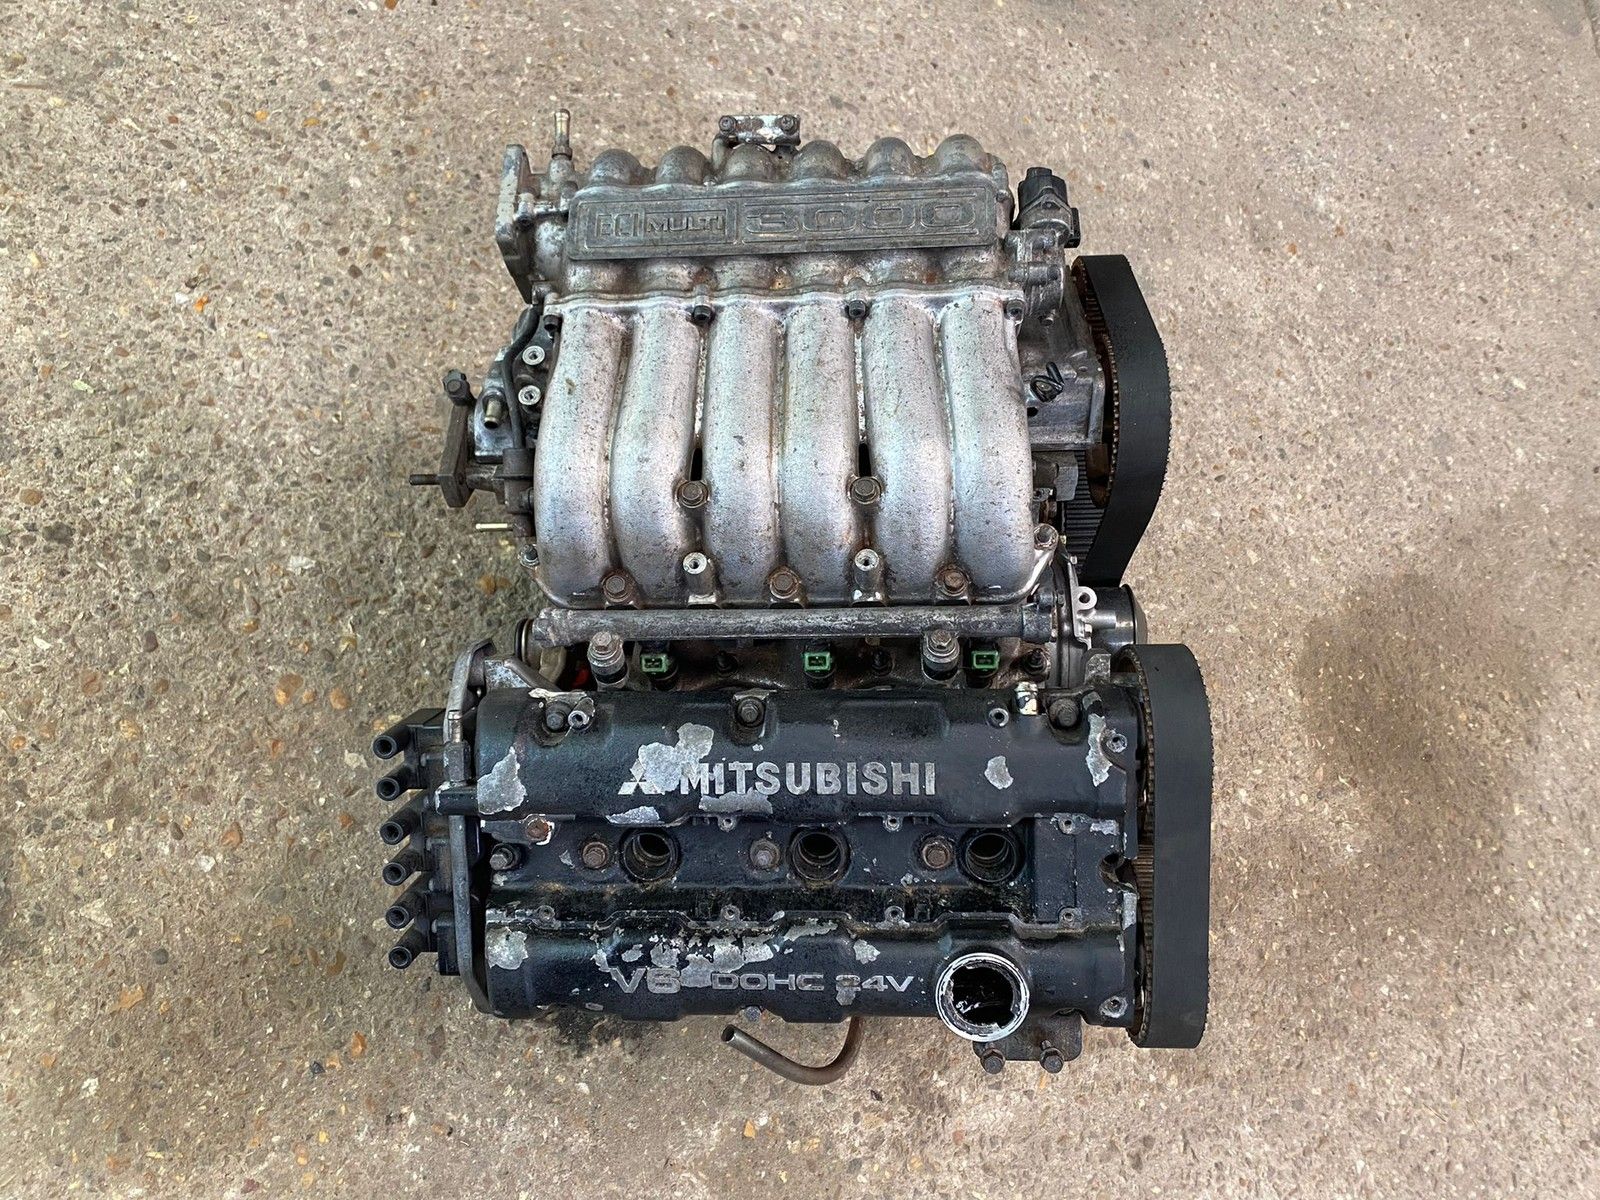 Mitsubishi 3000GT GTO 3.0 Engine 6G72 (Non-Turbo)